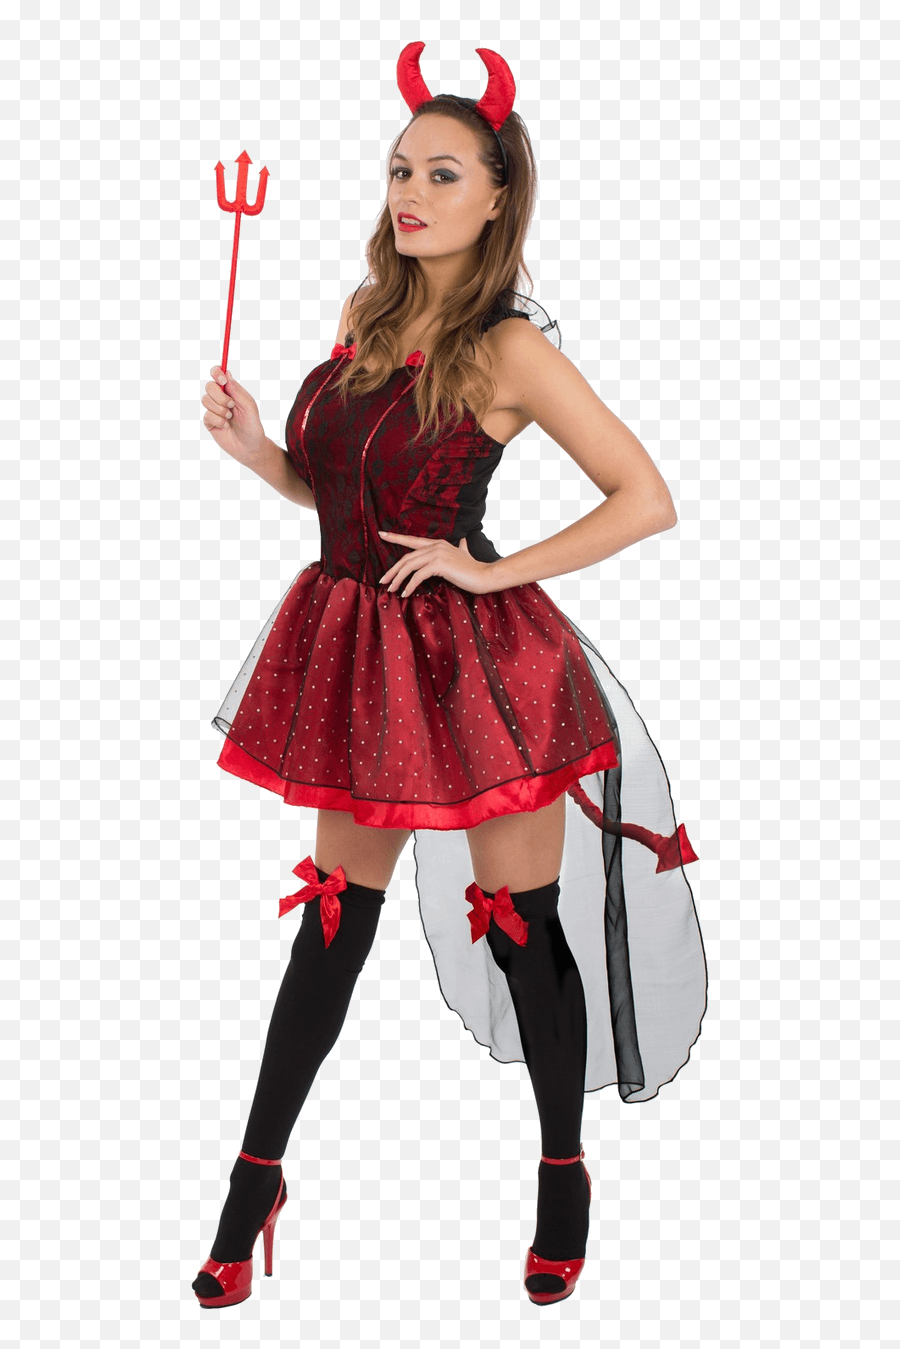 Download Cute Devil Costumes For Girls - Full Size Png Image Event Emoji,Cute Emoji Costumes